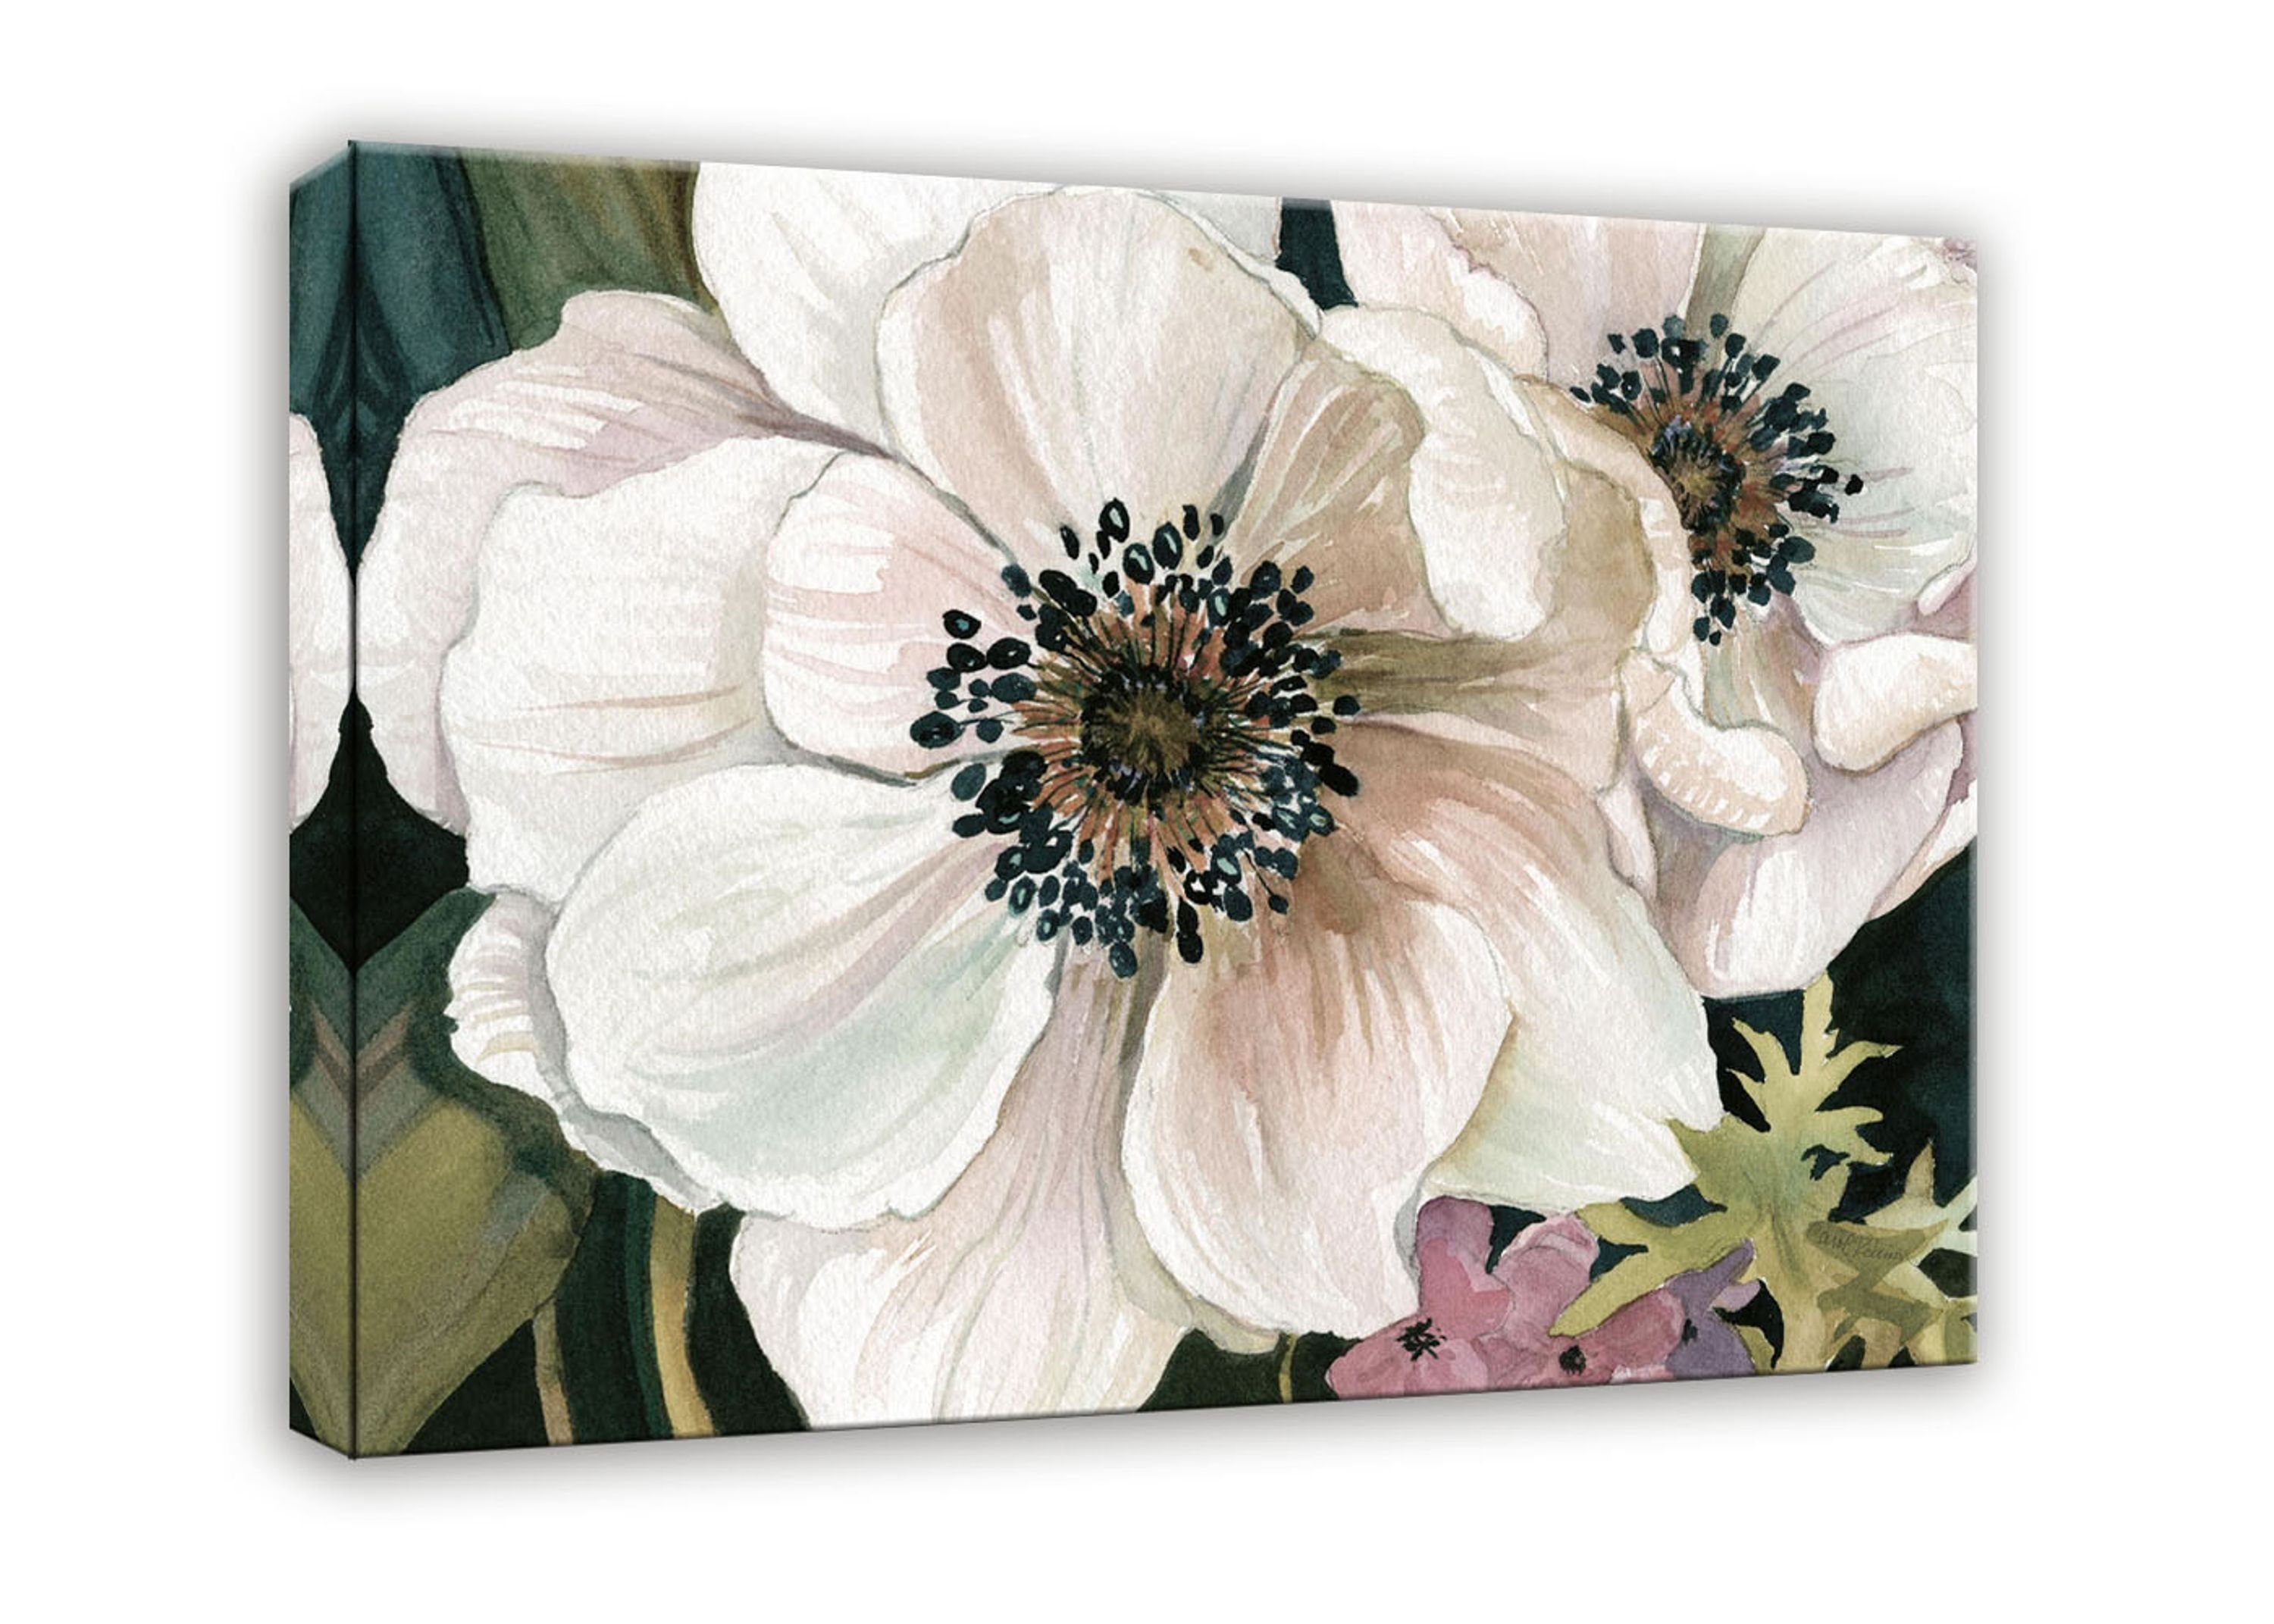 70x50cm artissimo Kunst-Edition Bild Leinwand Blüte, artissimo Robinson: Blume Anemone Aquarell Leinwandbild Study Carol auf I